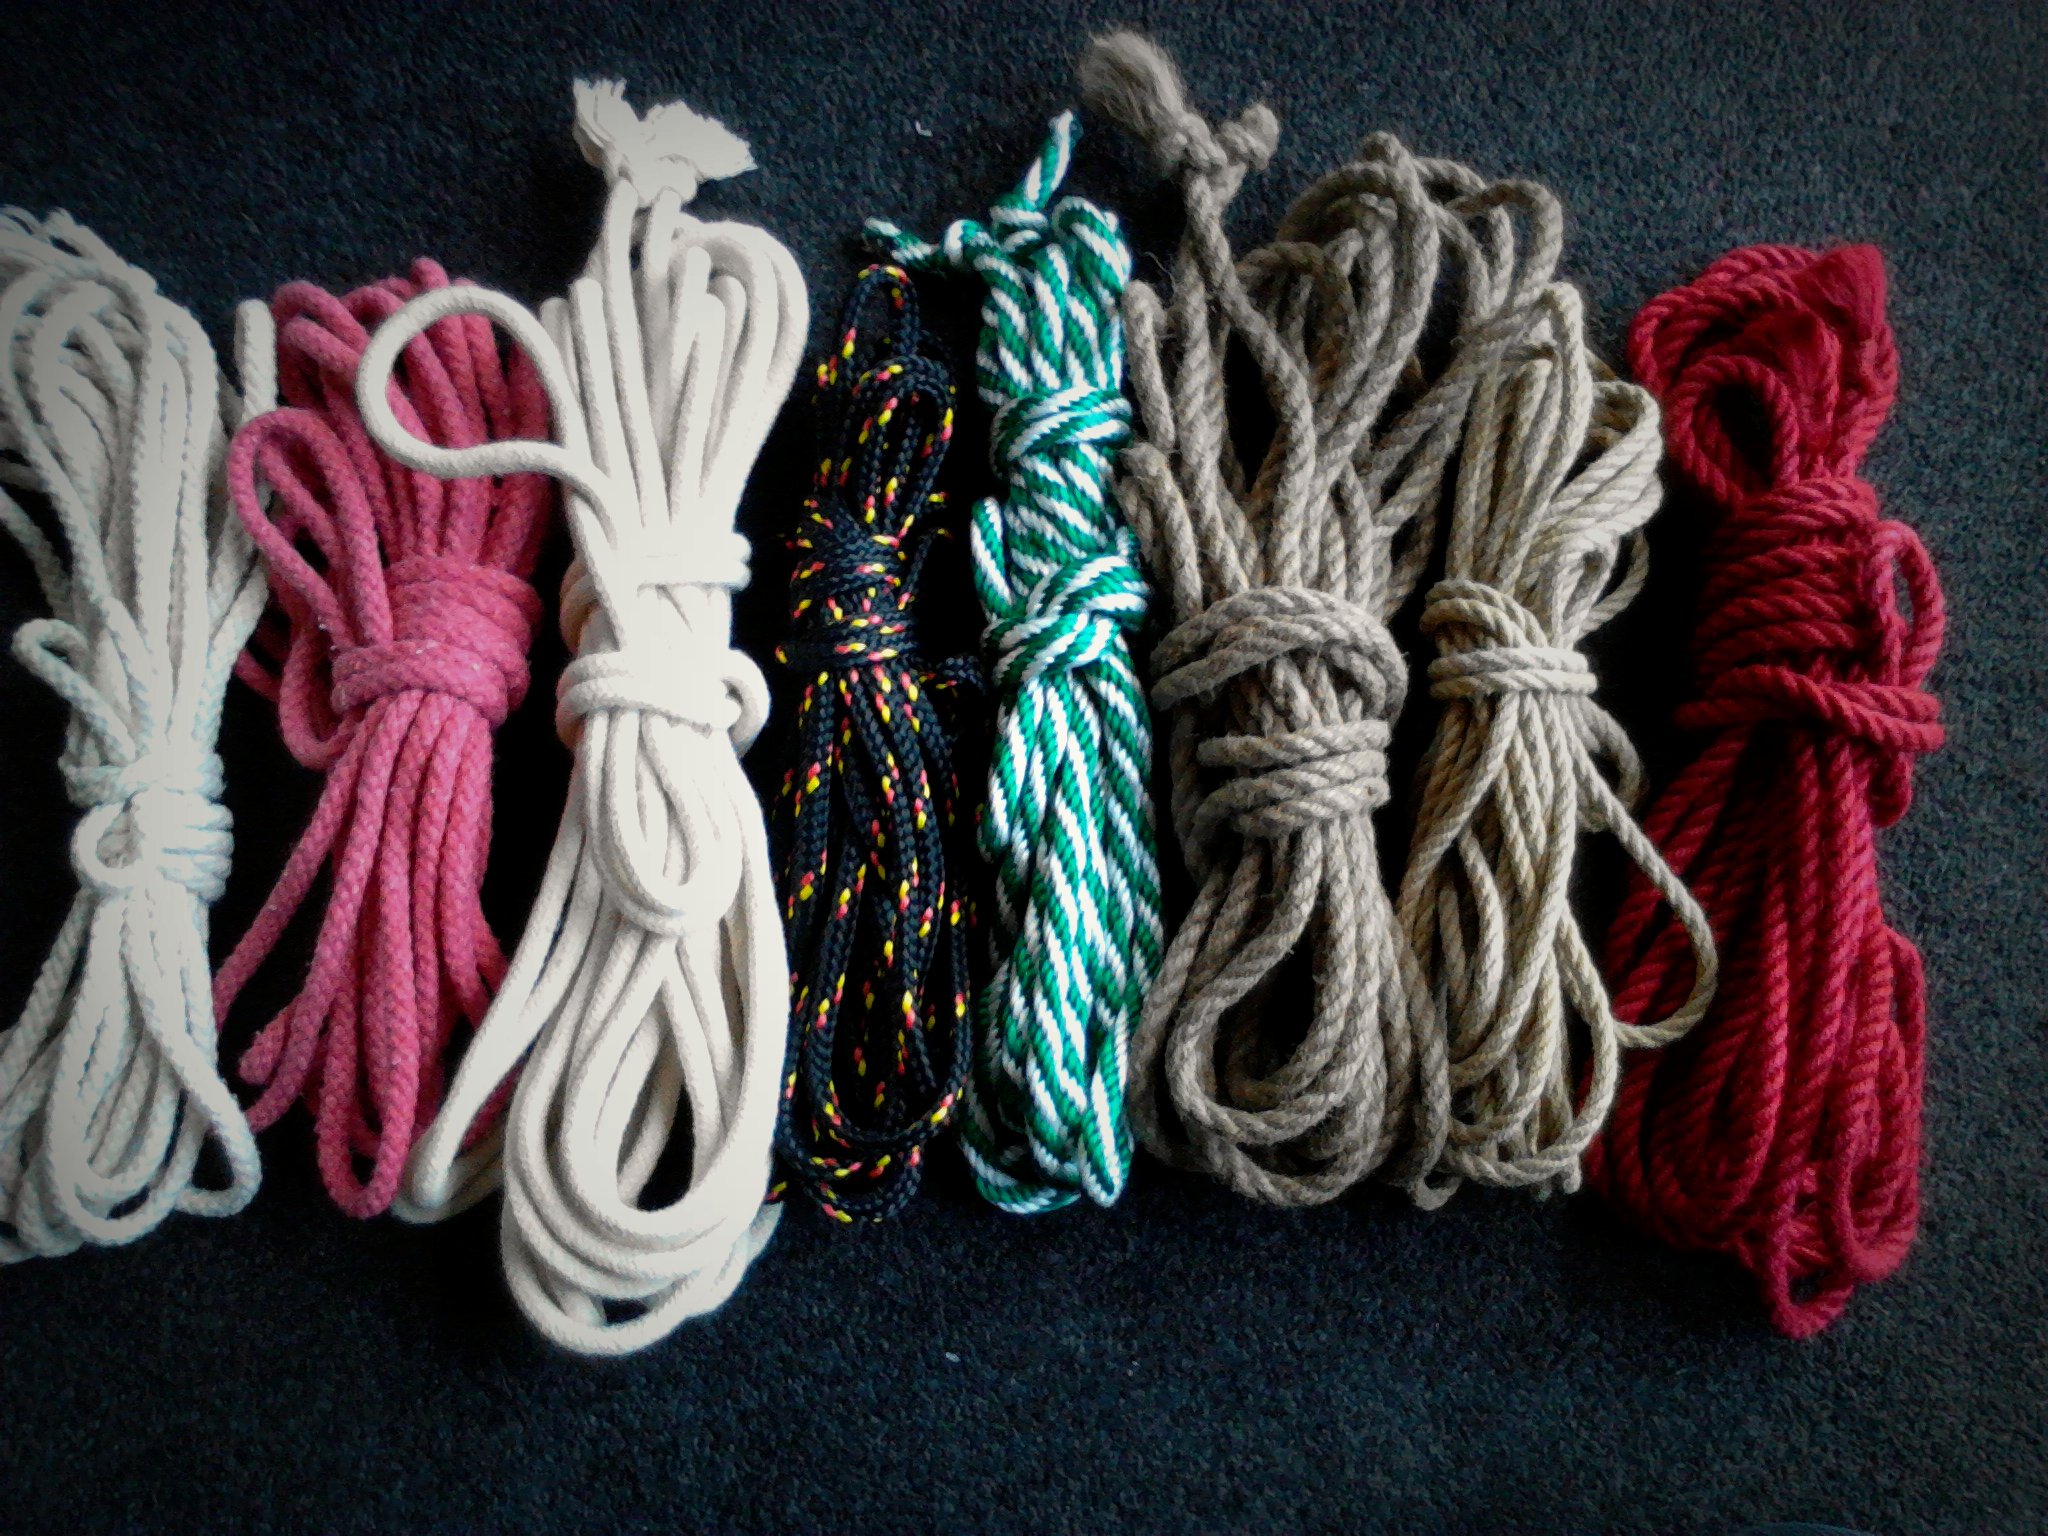 Shibari, the practice of rope bondage